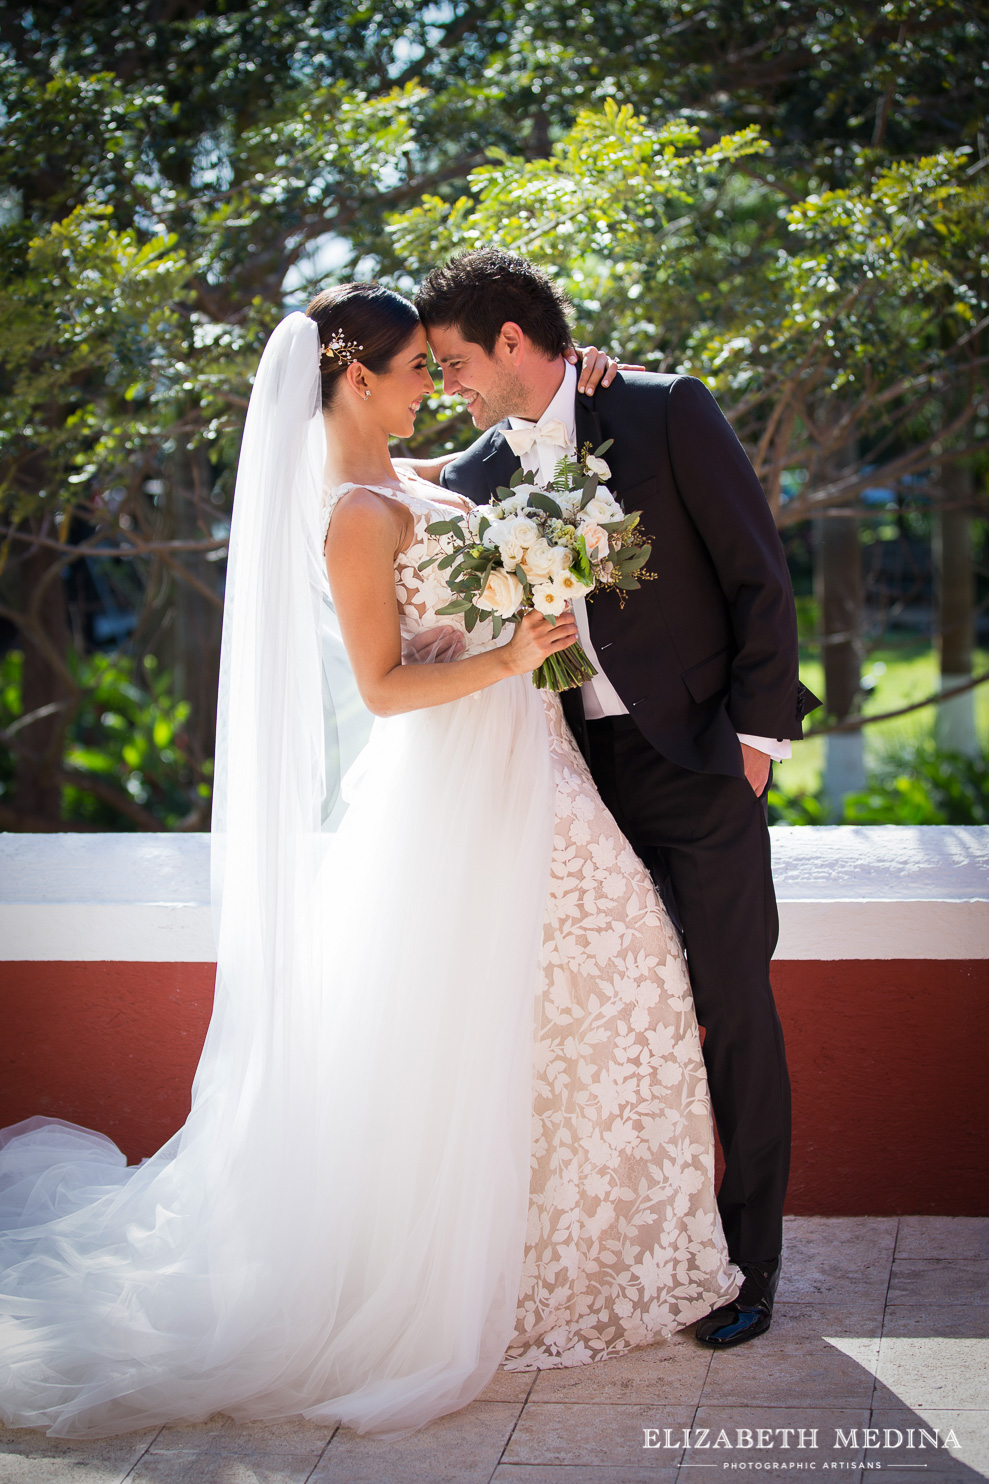  elizabeth medina wedding photographer_5050 Hacienda San Diego Cutz, Andrea and Diego’s Amazing Wedding Celebration  